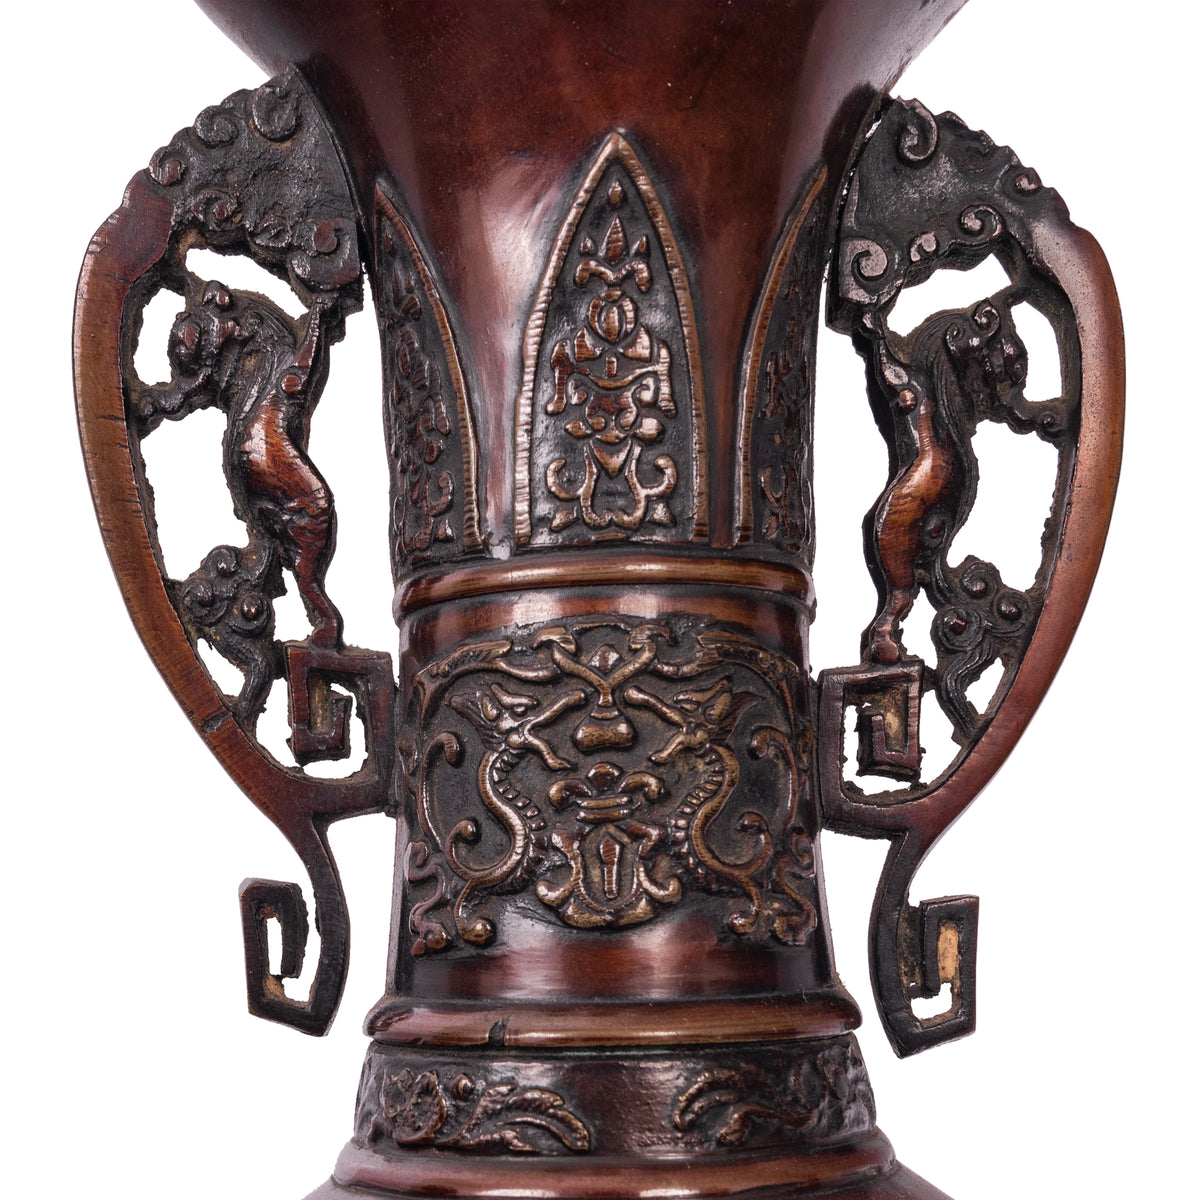 Large & Fine Pair of Antique Japanese Meiji Period Patinated Bronze Vases, 1890